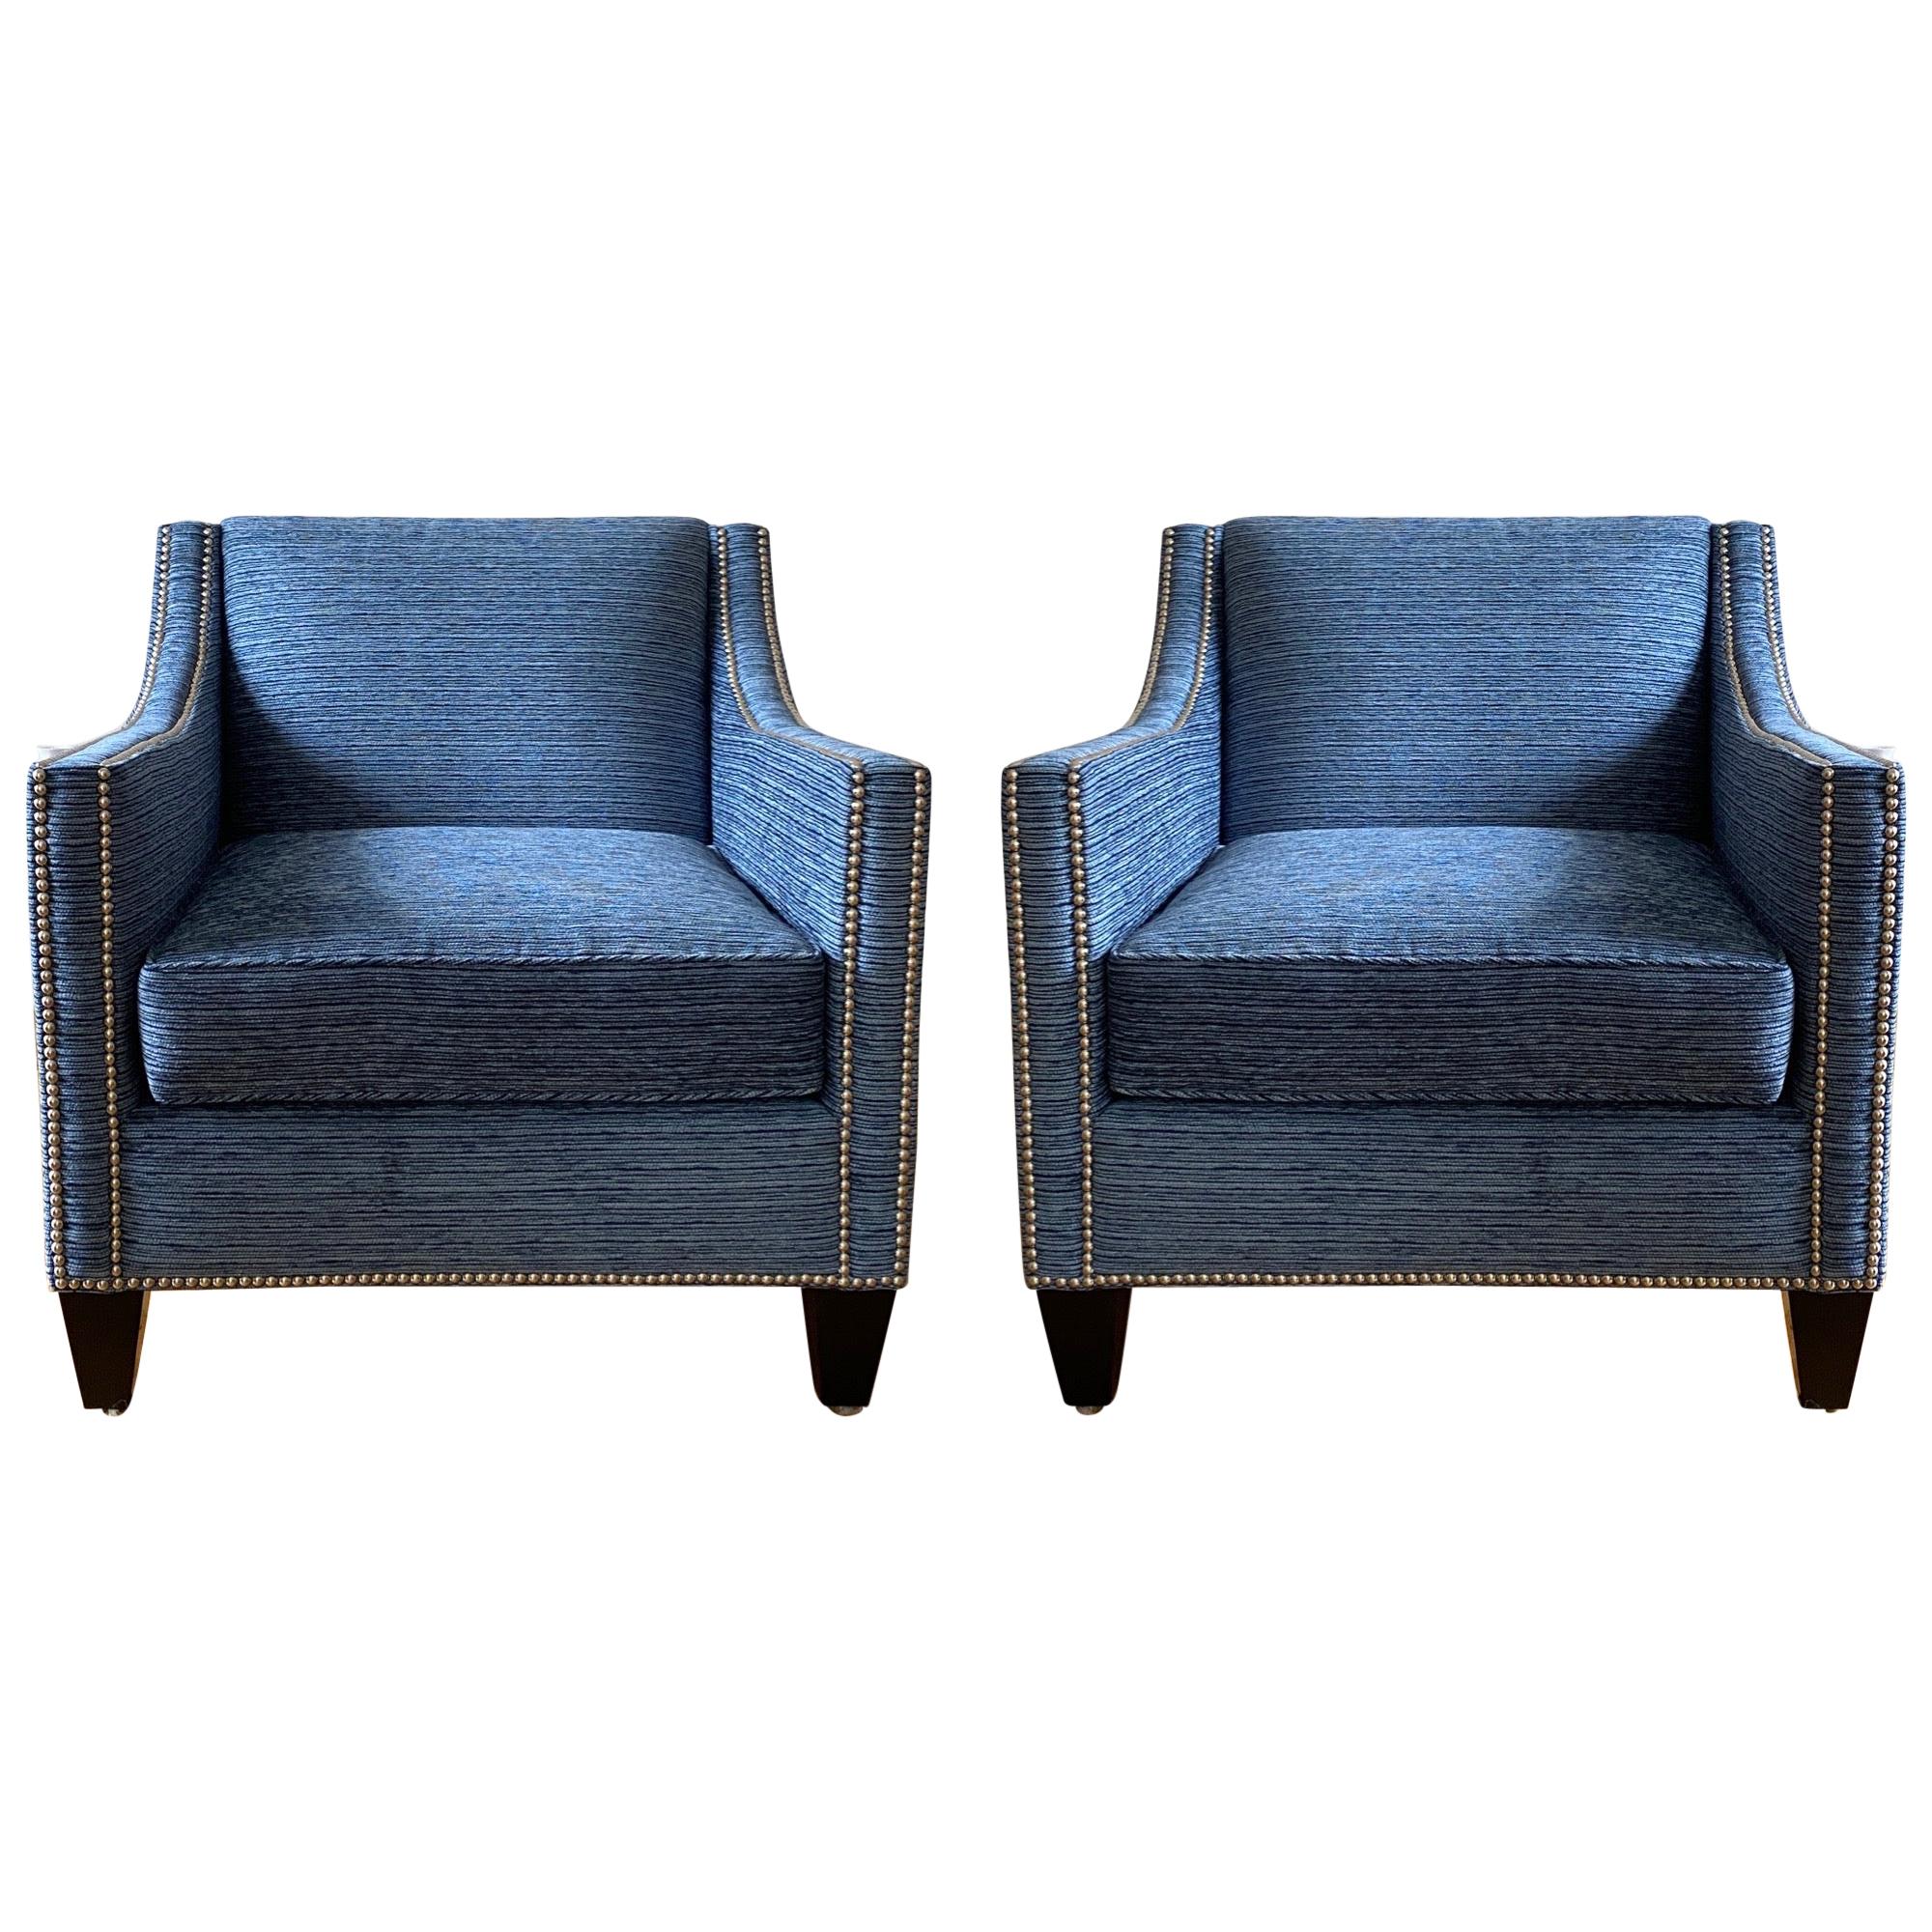 Modern Club Chairs in Blue Performance Fabric with Nickel Nailhead Trim, Pair